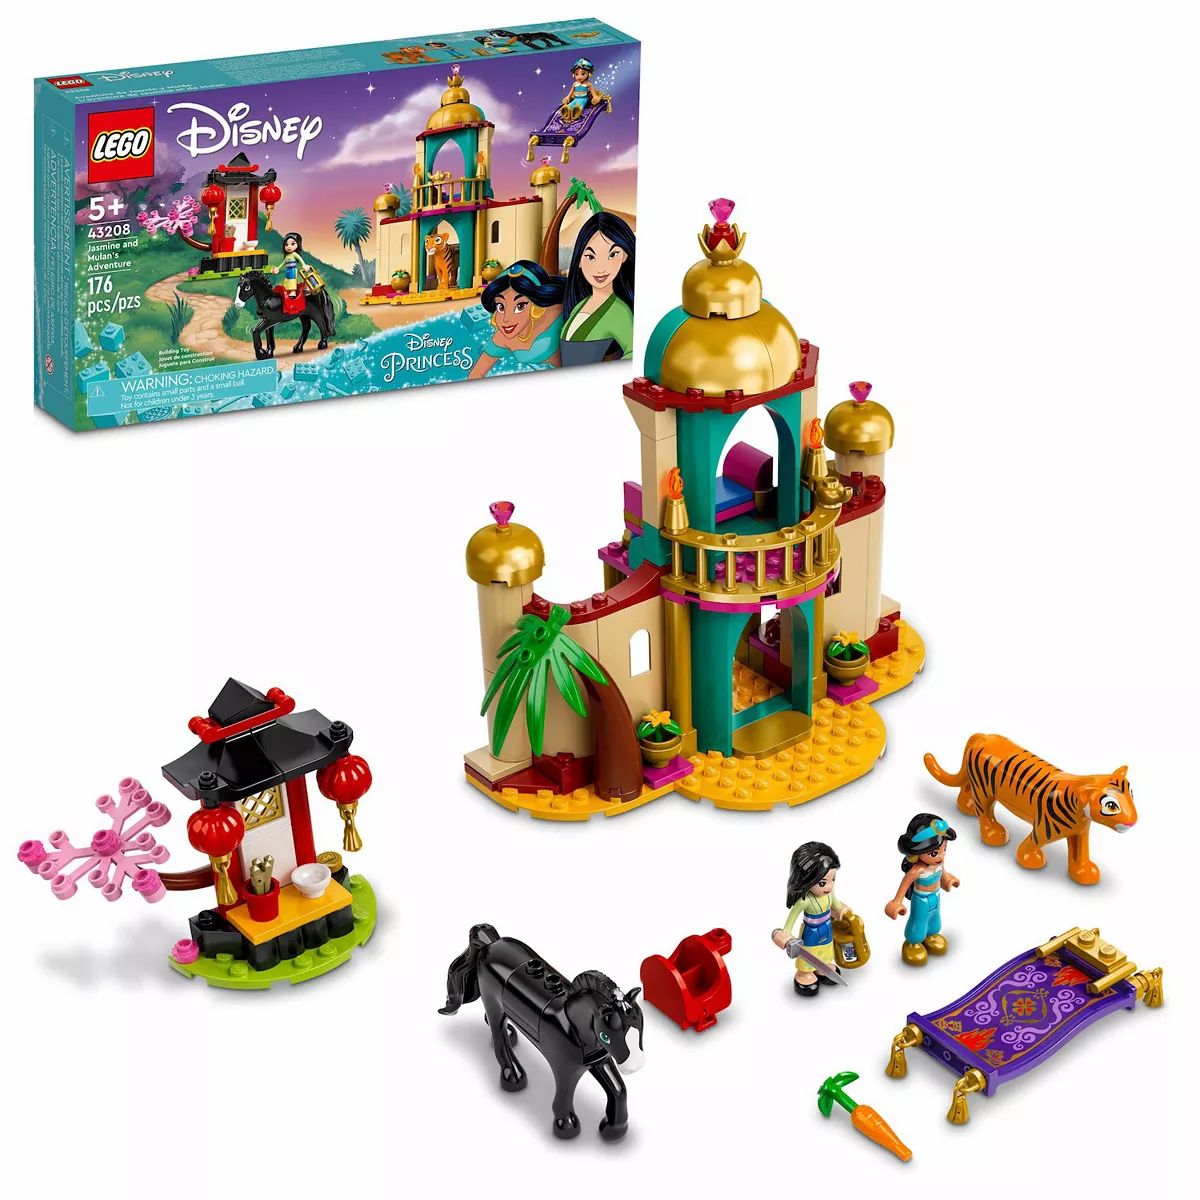 Disney Princess Jasmine and Mulan's Adventure 43208 Building Kit (176 Pieces) by LEGO | Kohl's